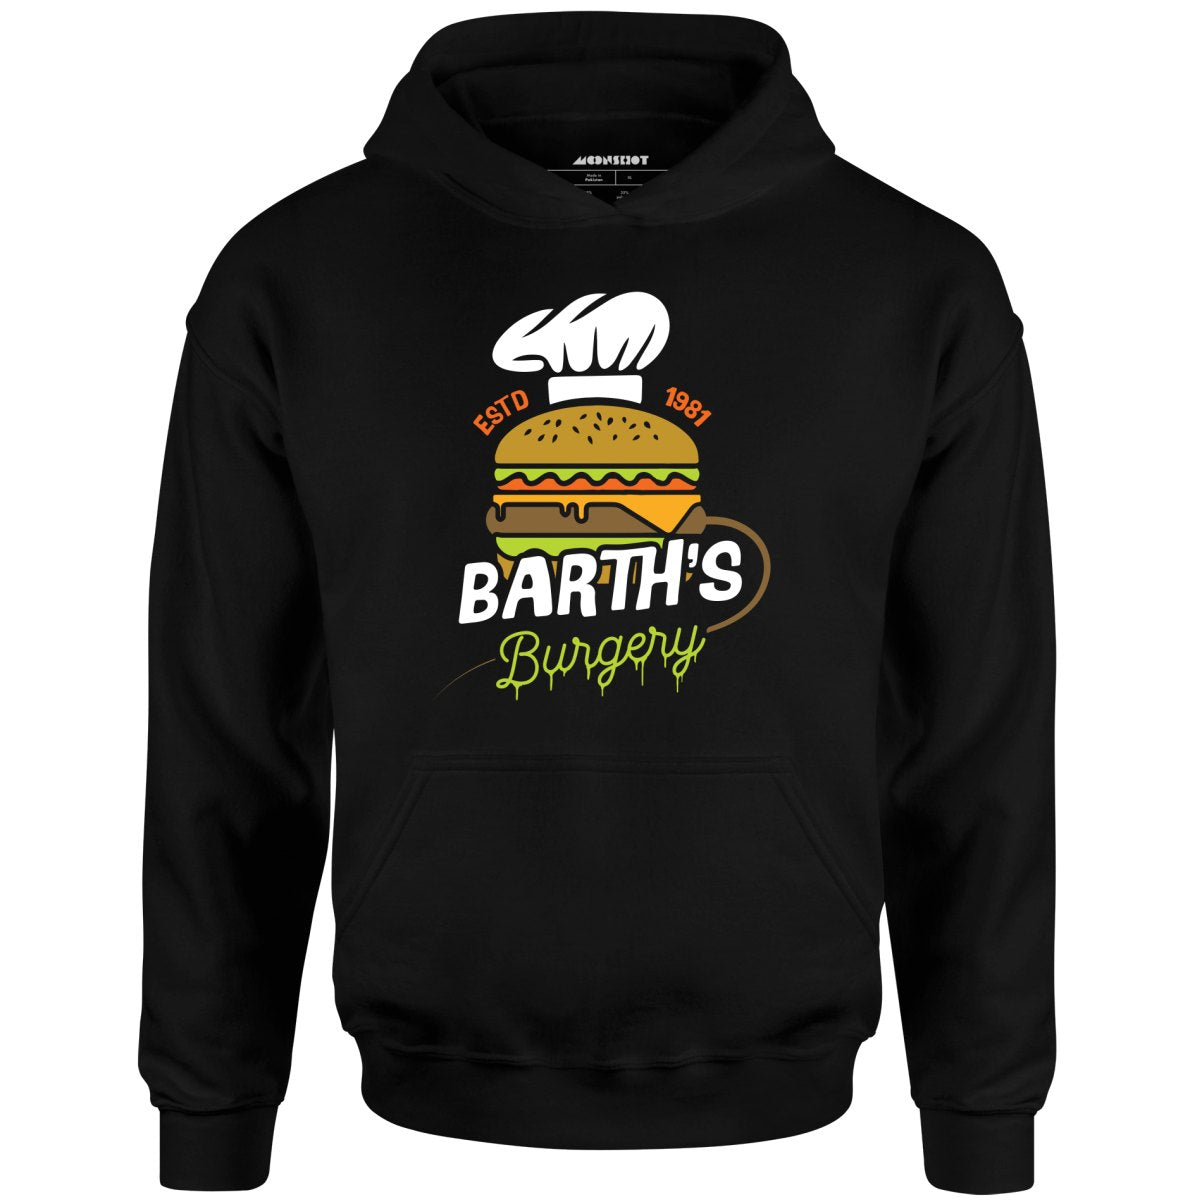 Barth's Burgery - Unisex Hoodie